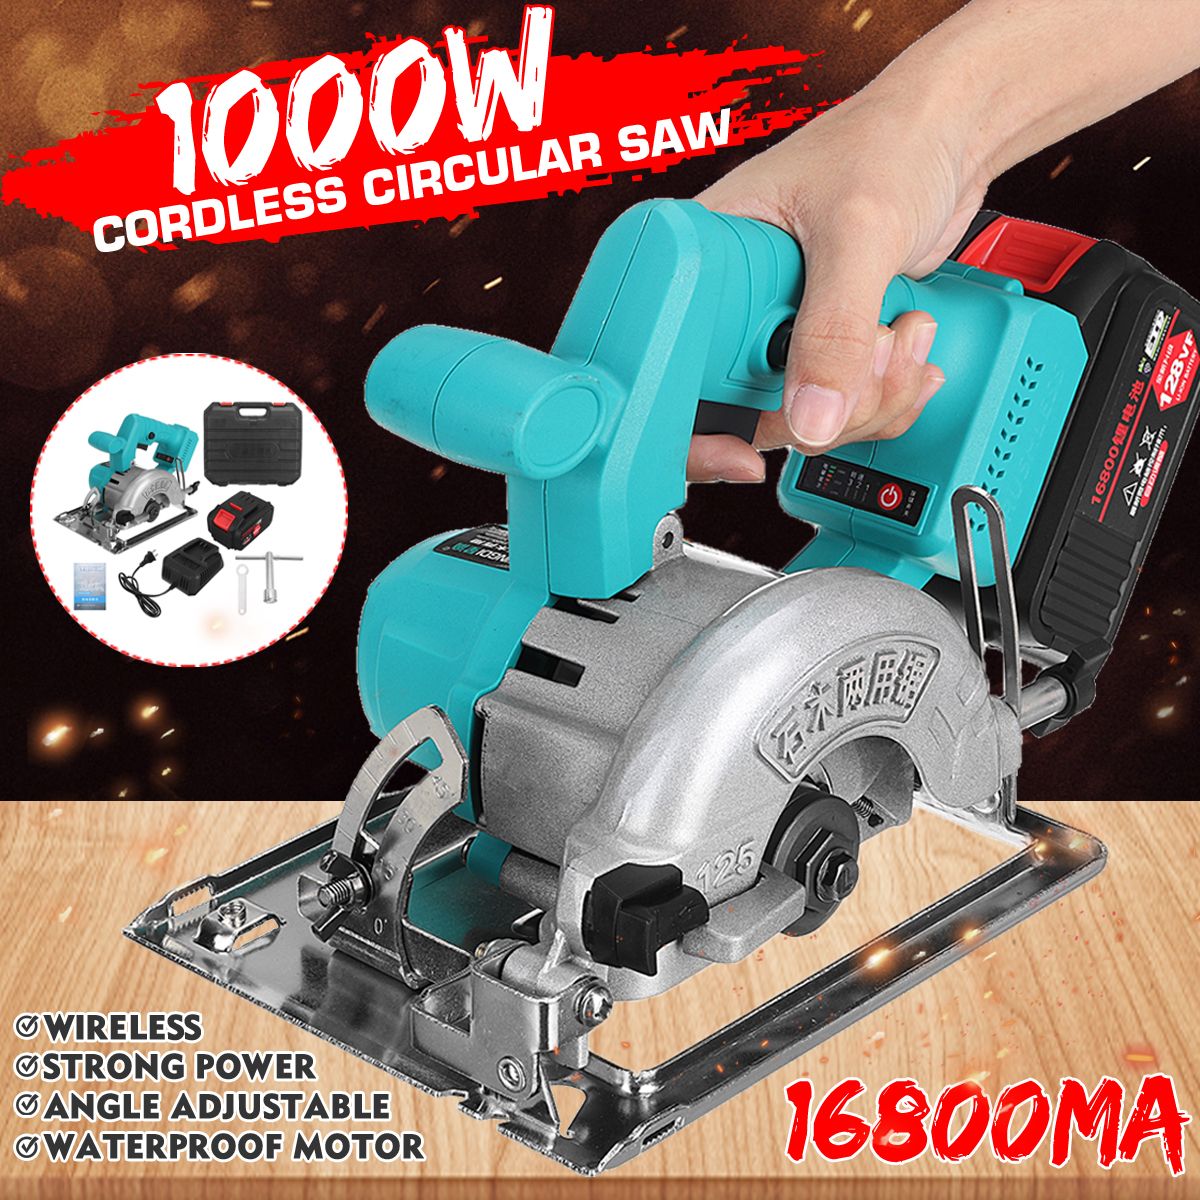 1000W-16800MA-Electric-Circular-Saw-125mm-Blade-Cordless-Circular-Saw-Angle-Adjustable-for-Woodworki-1696587